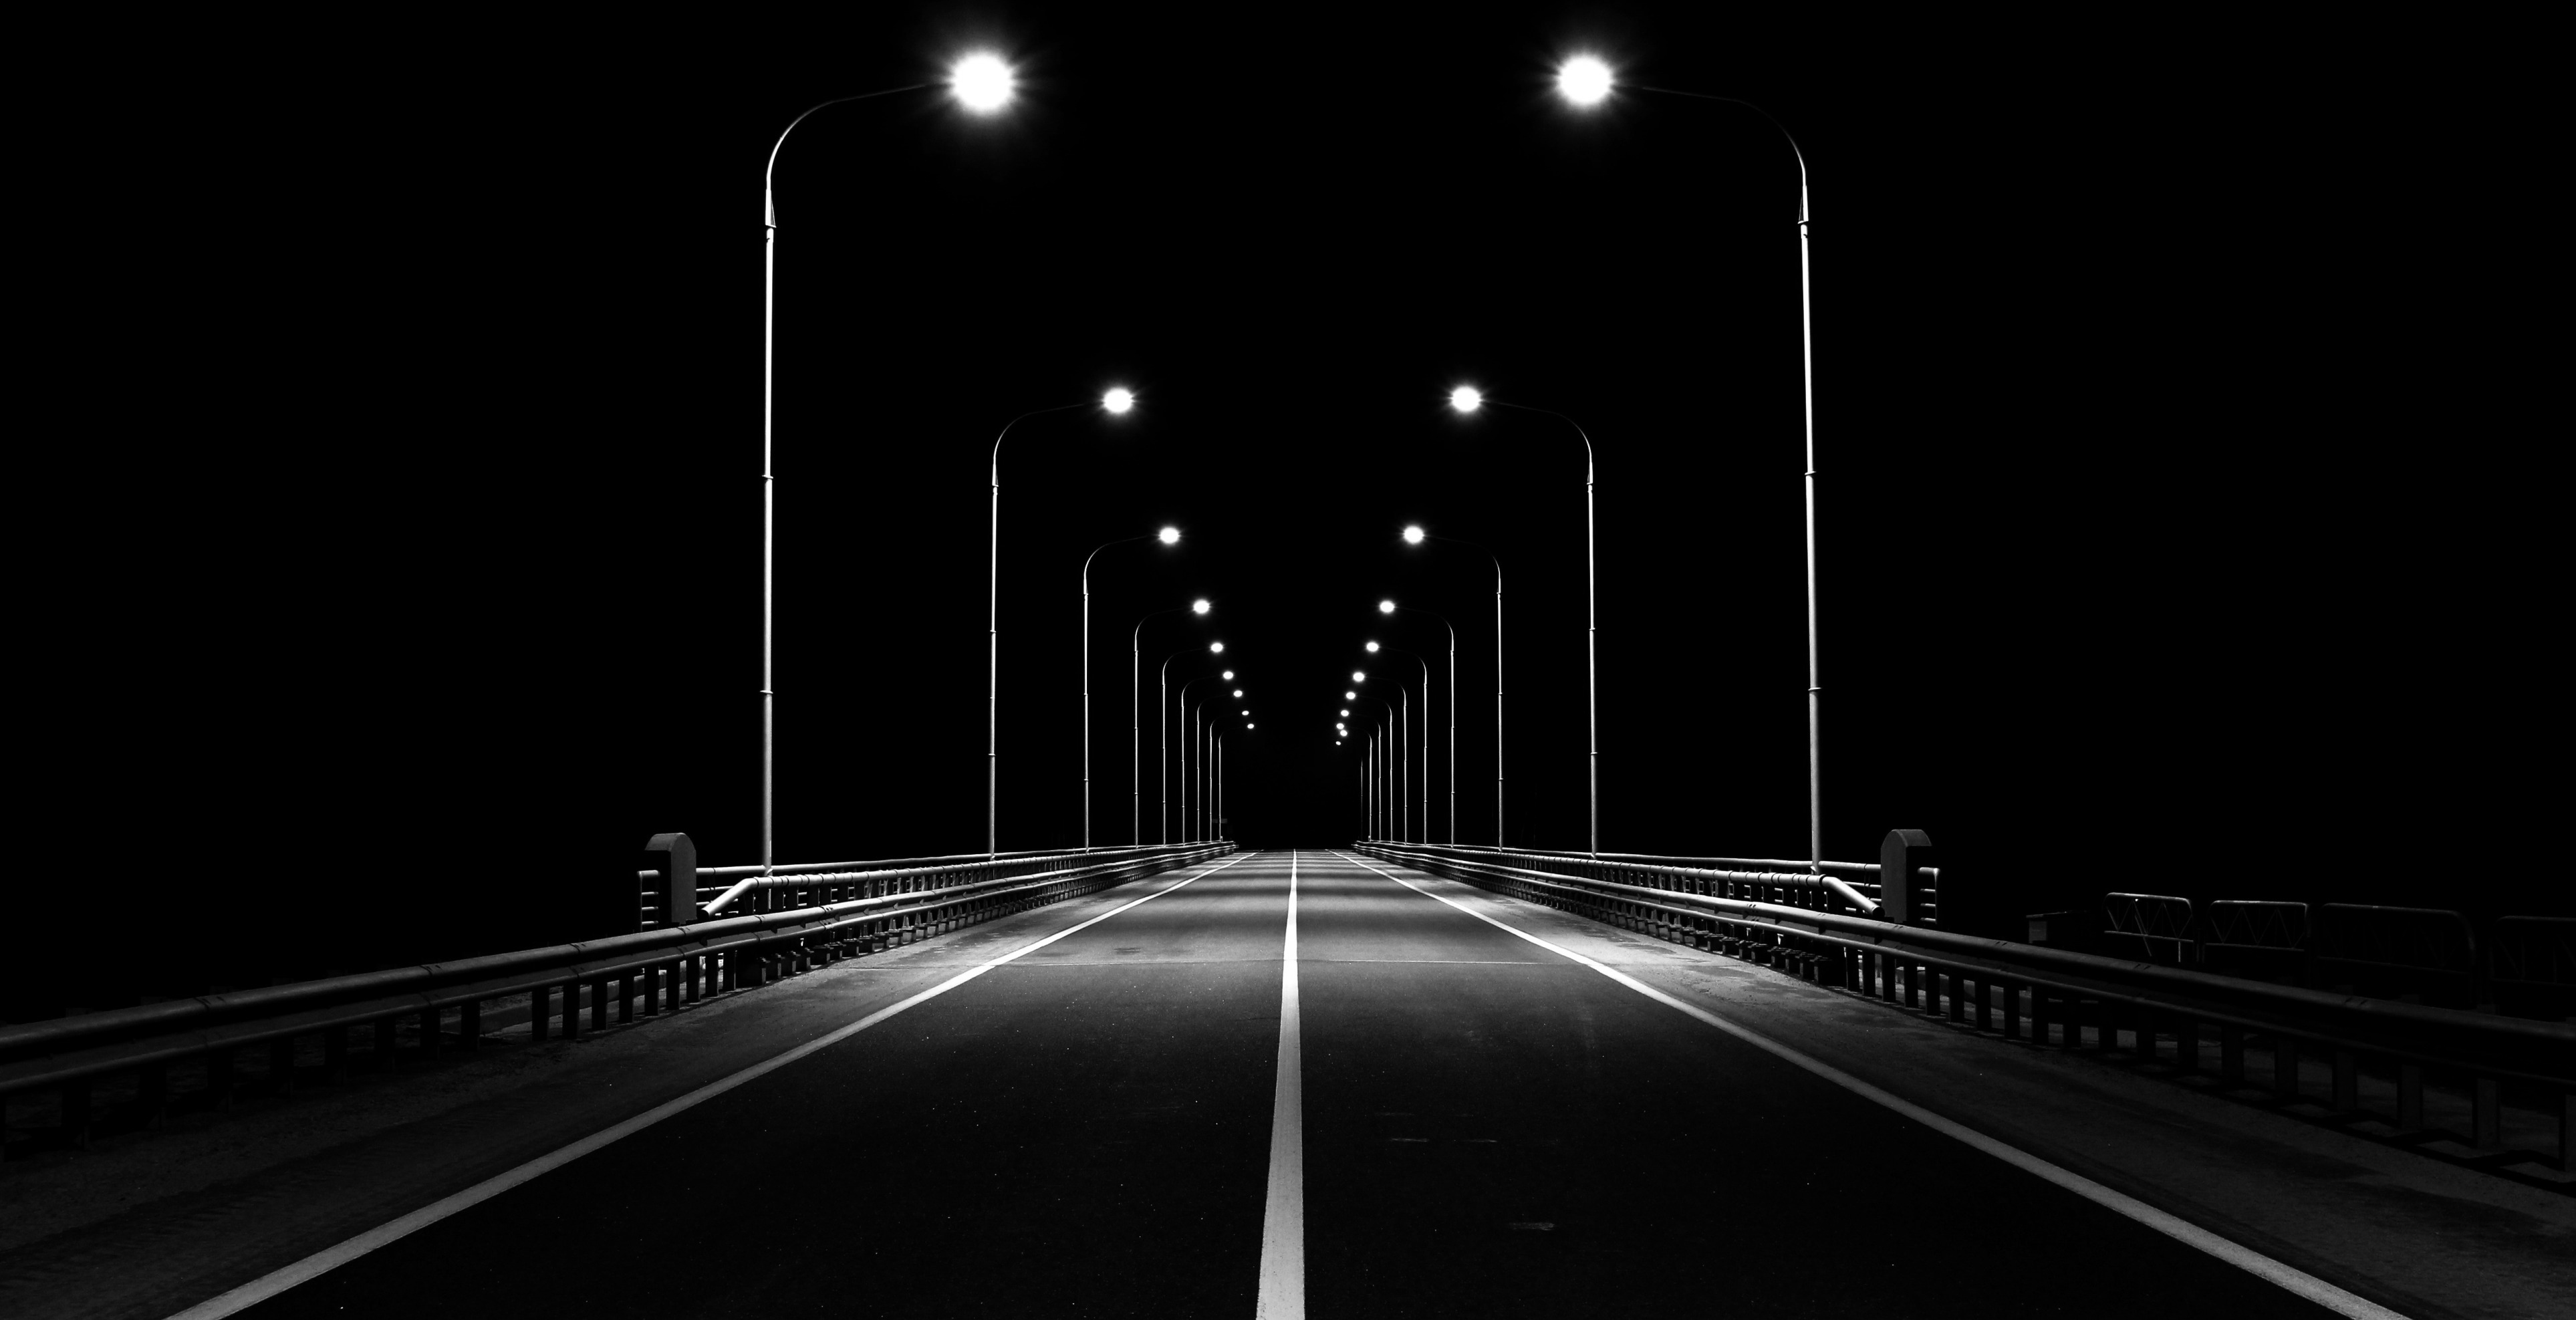 Night Monochrome White Light Street Light Dark Road Lines Lights Empty 3854x1975